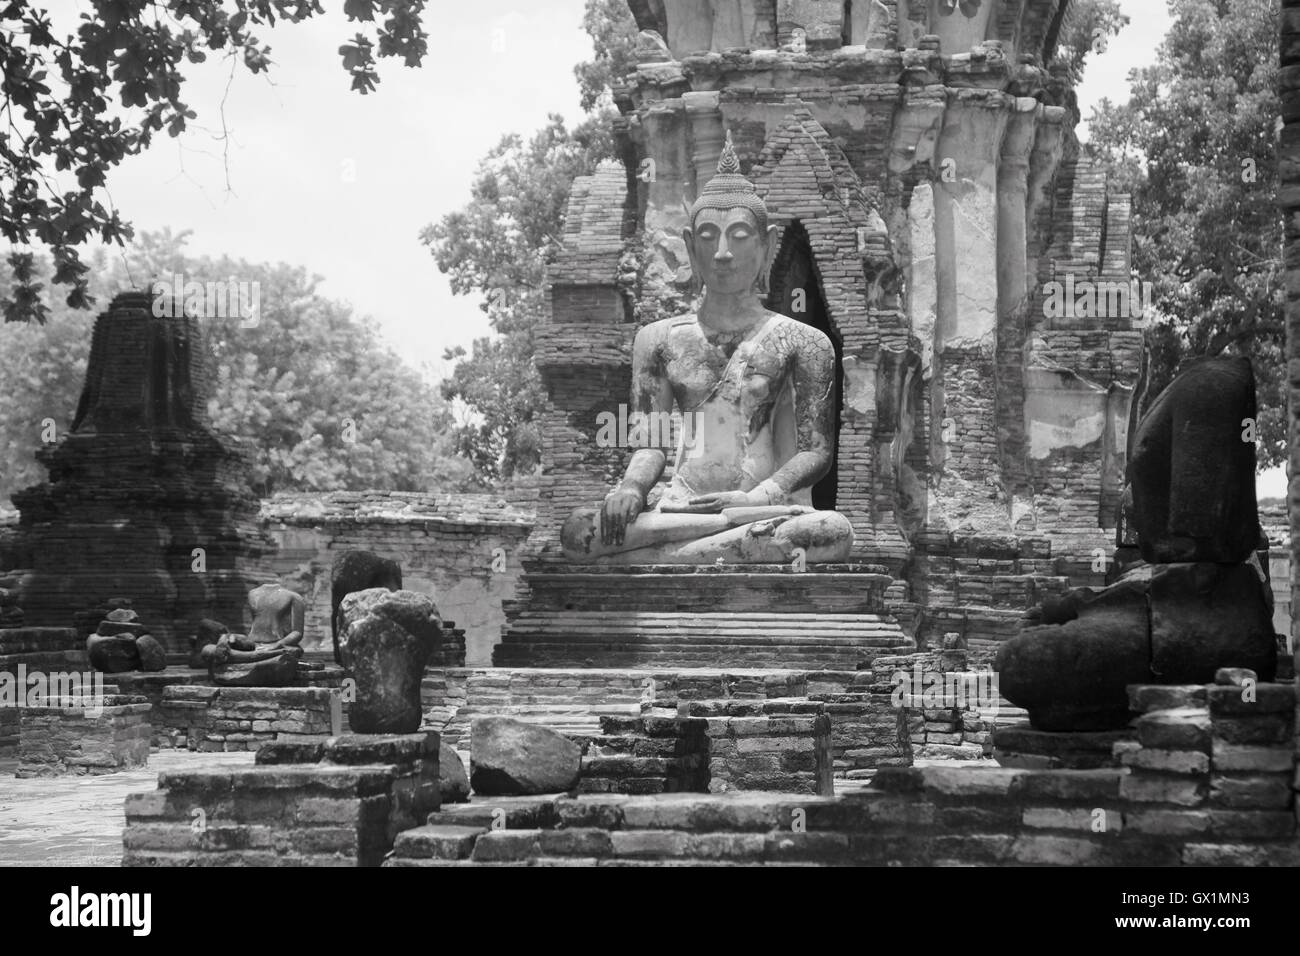 A Buddha at the  old Siam capital city of Ayuttaya, Thailand Stock Photo